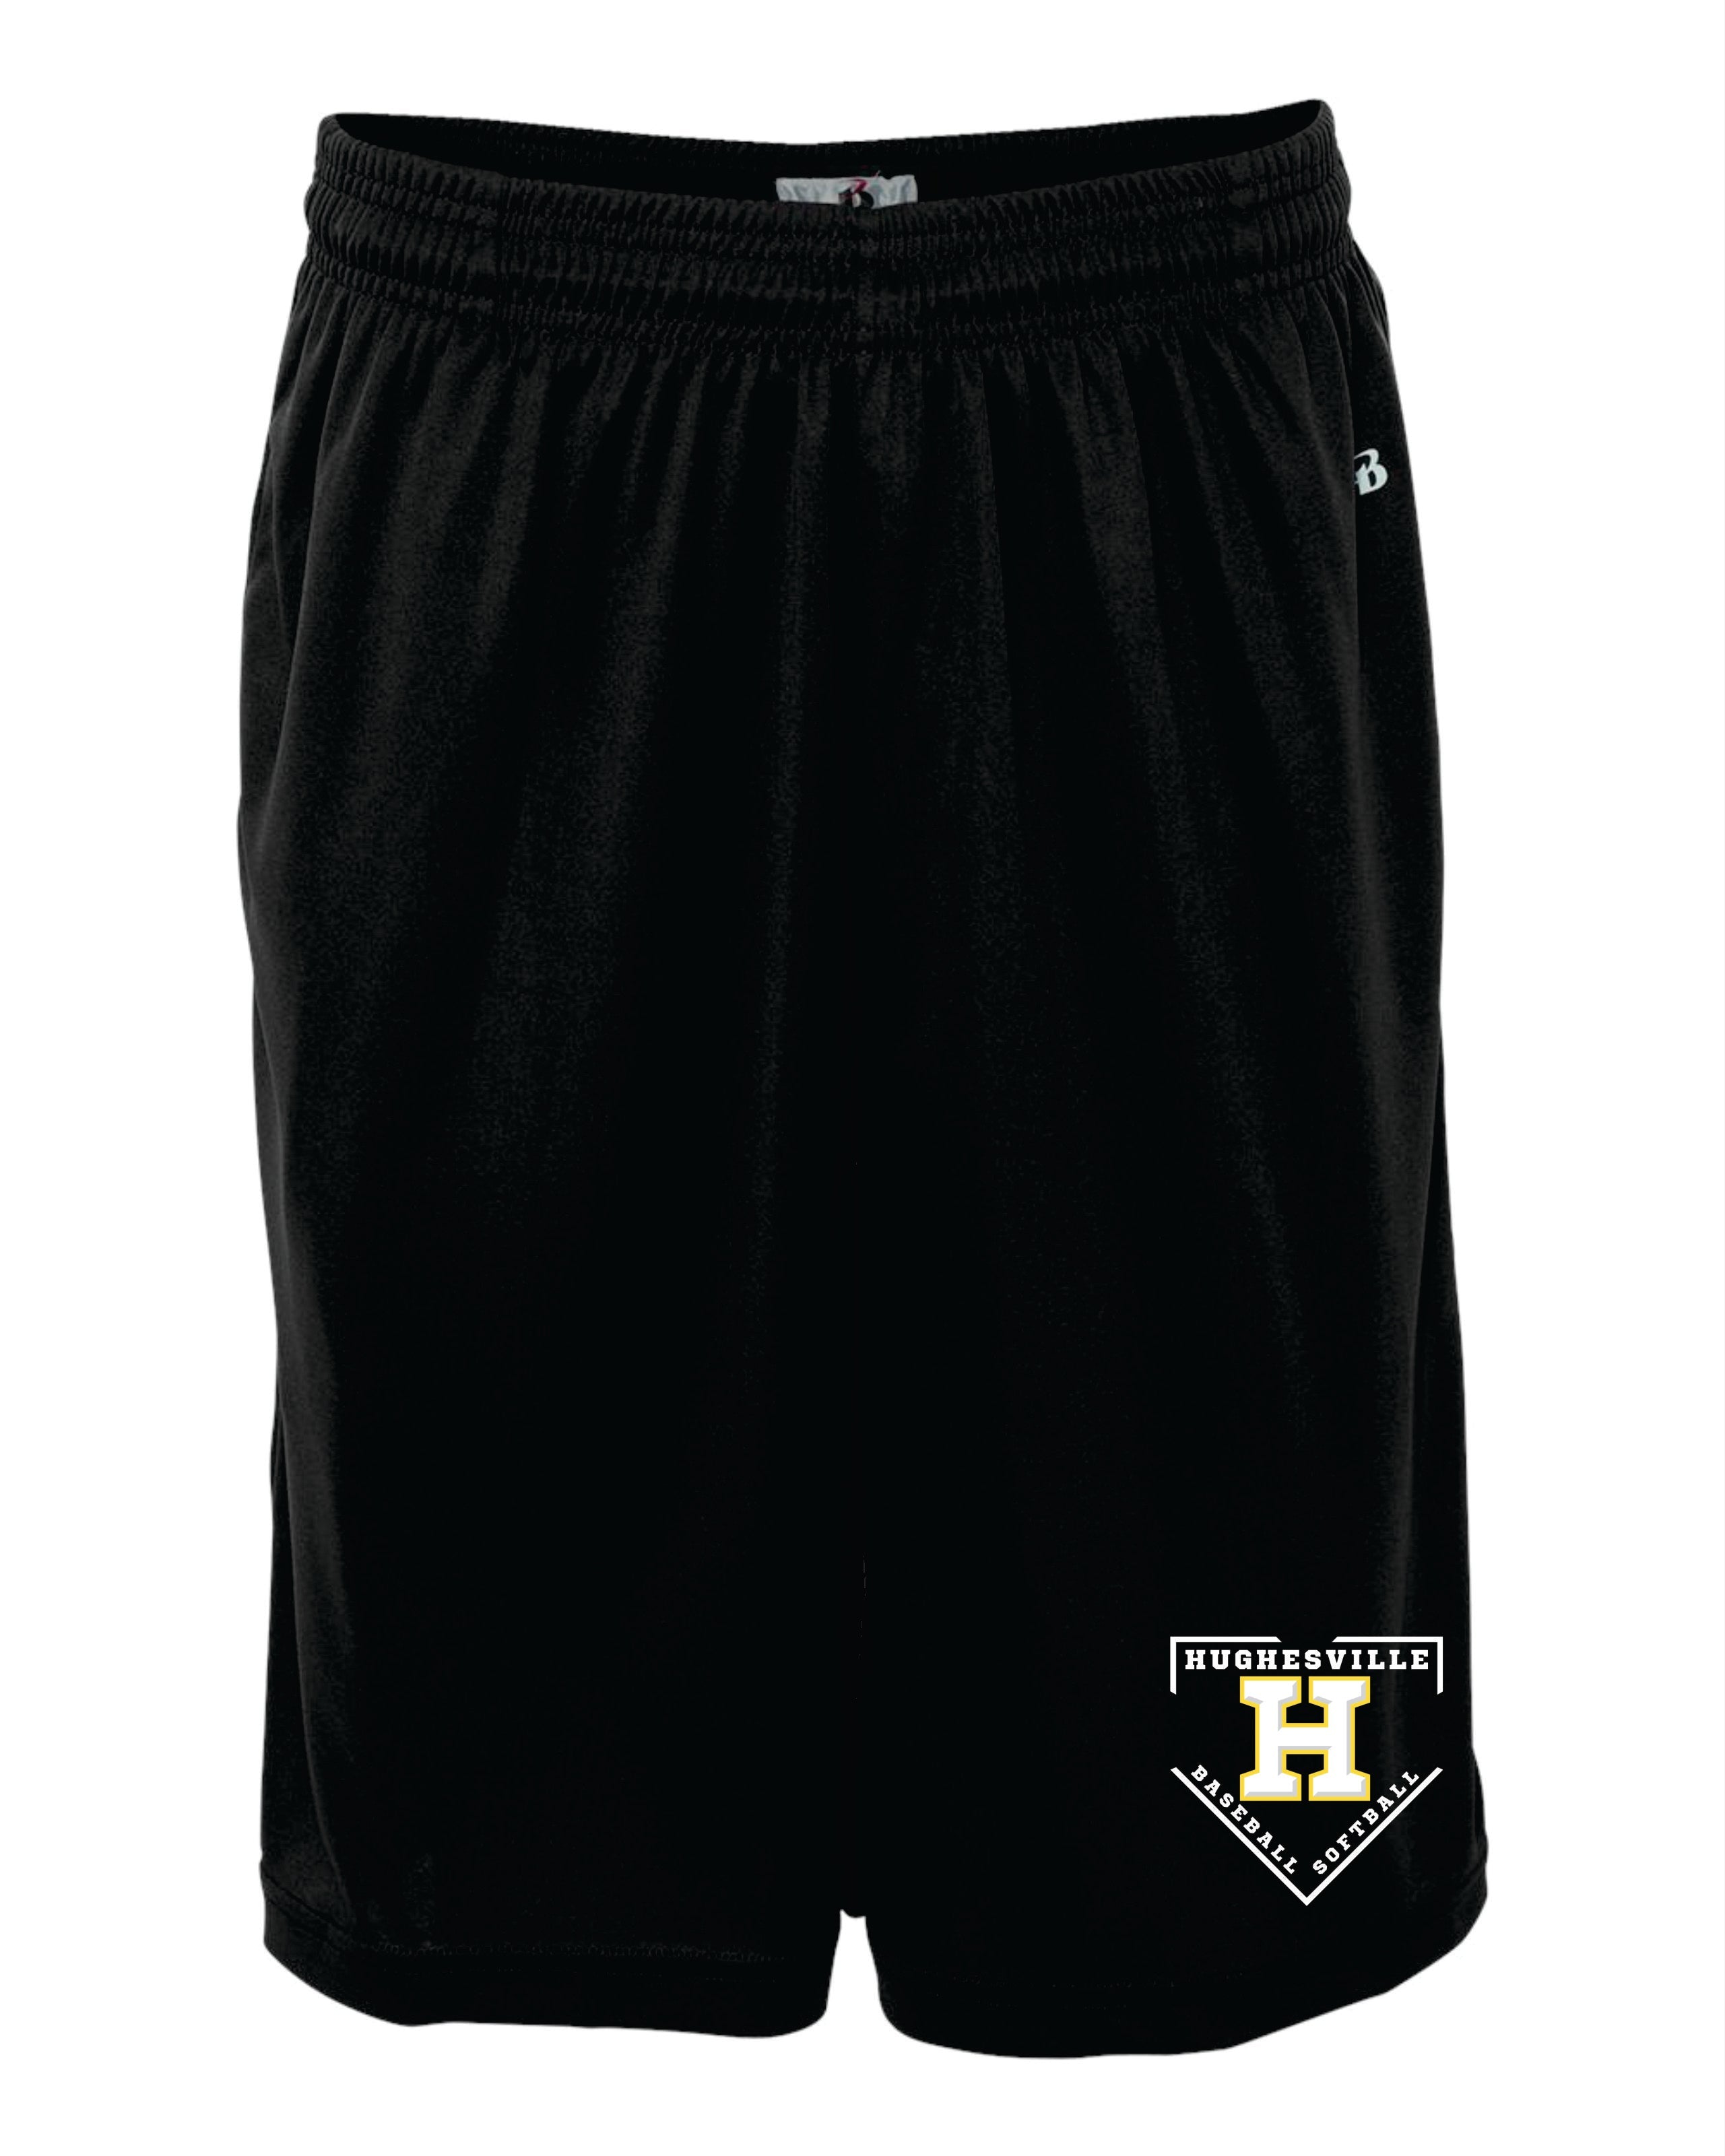 Hughesville Shorts-BOYS